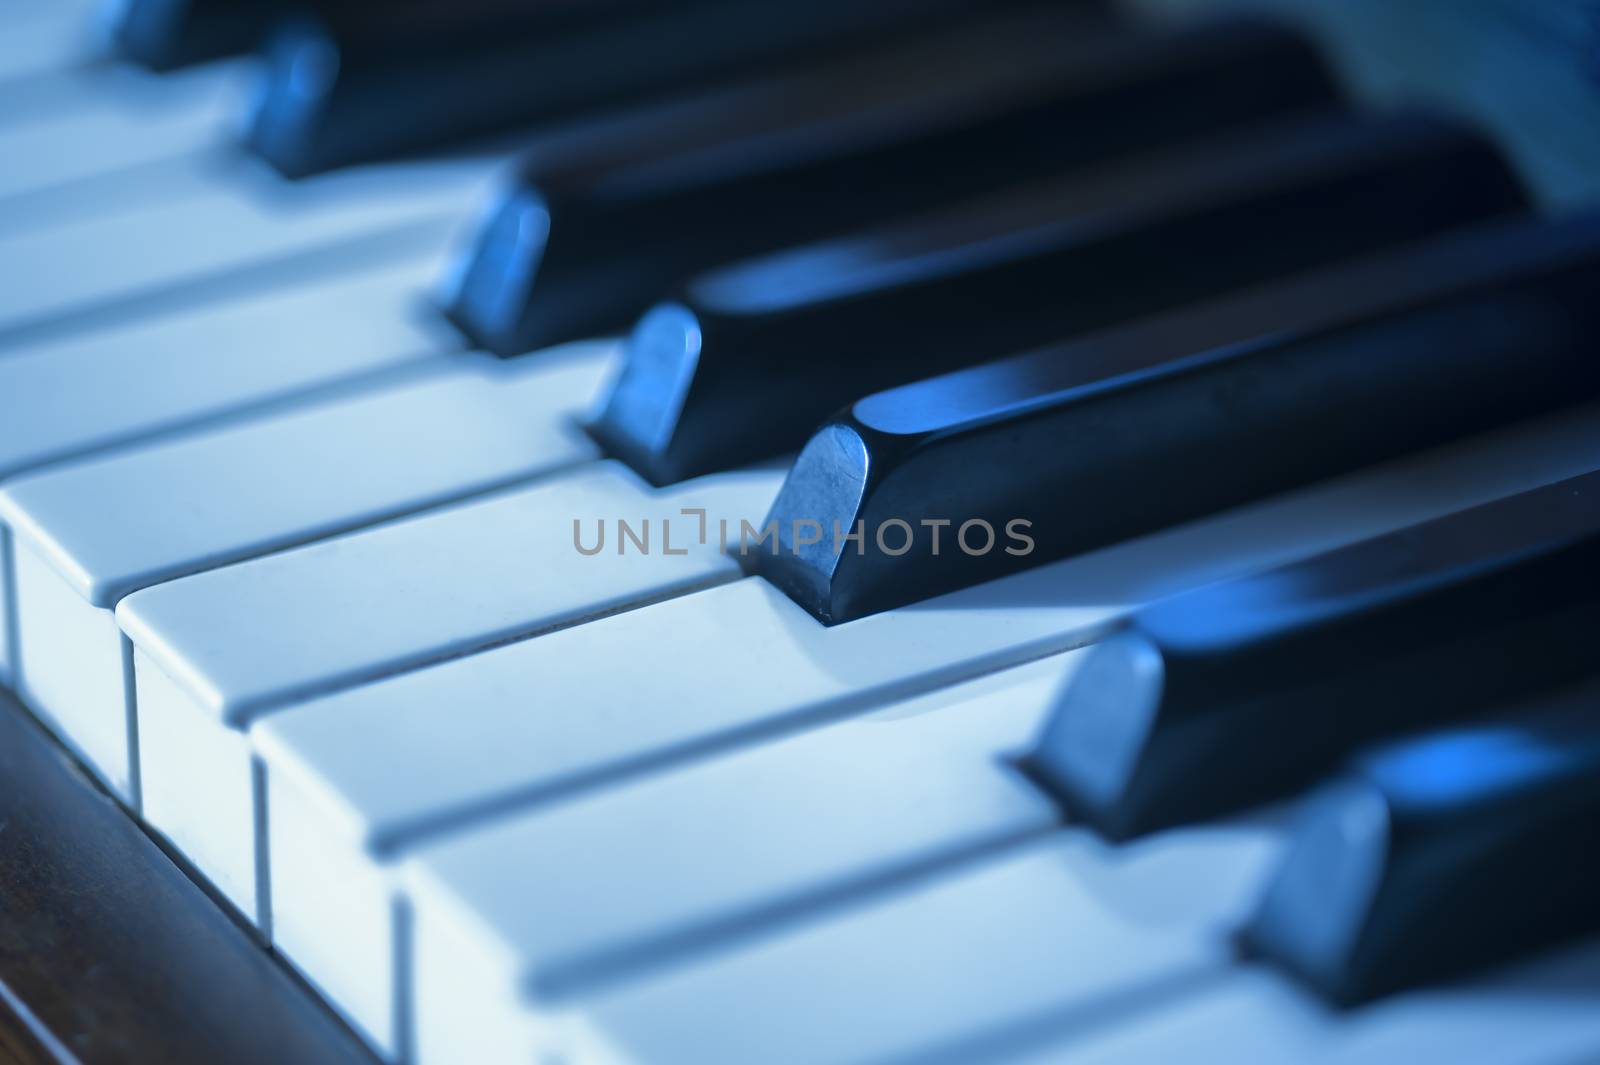 Piano key blues by f/2sumicron